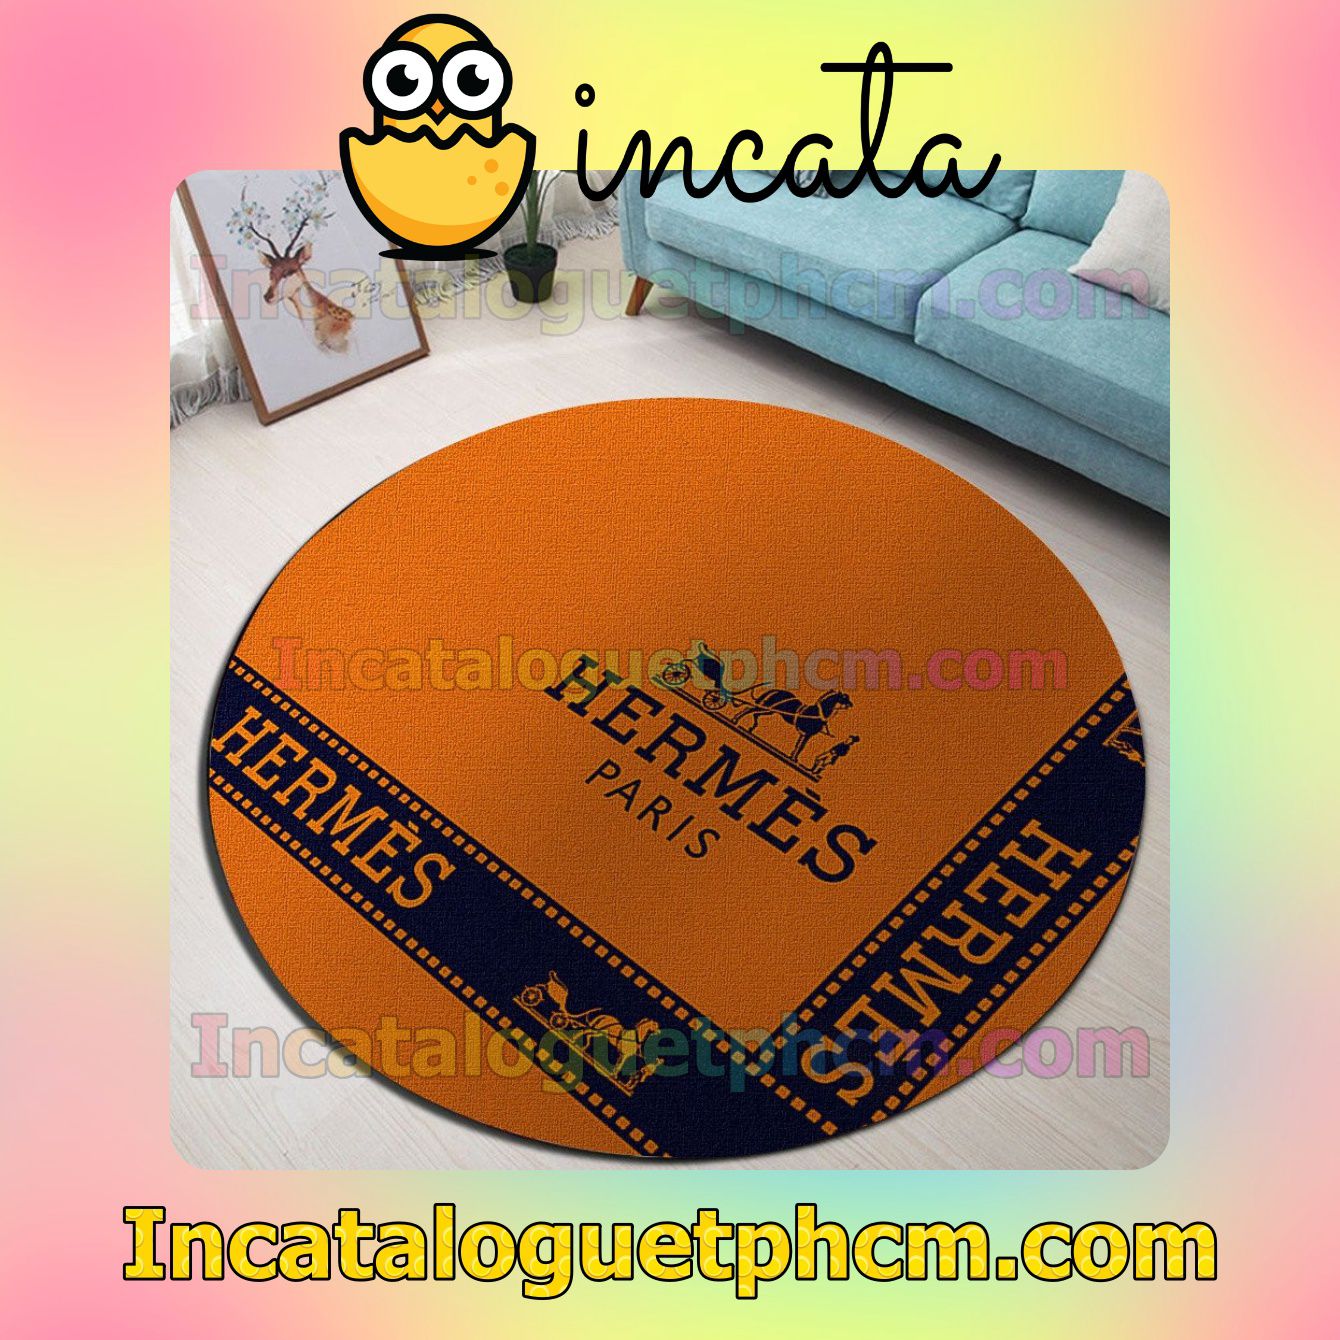 Hermes Paris Luxury Brand Perpendicular Lines Orange Round Carpet Rugs For Kitchen